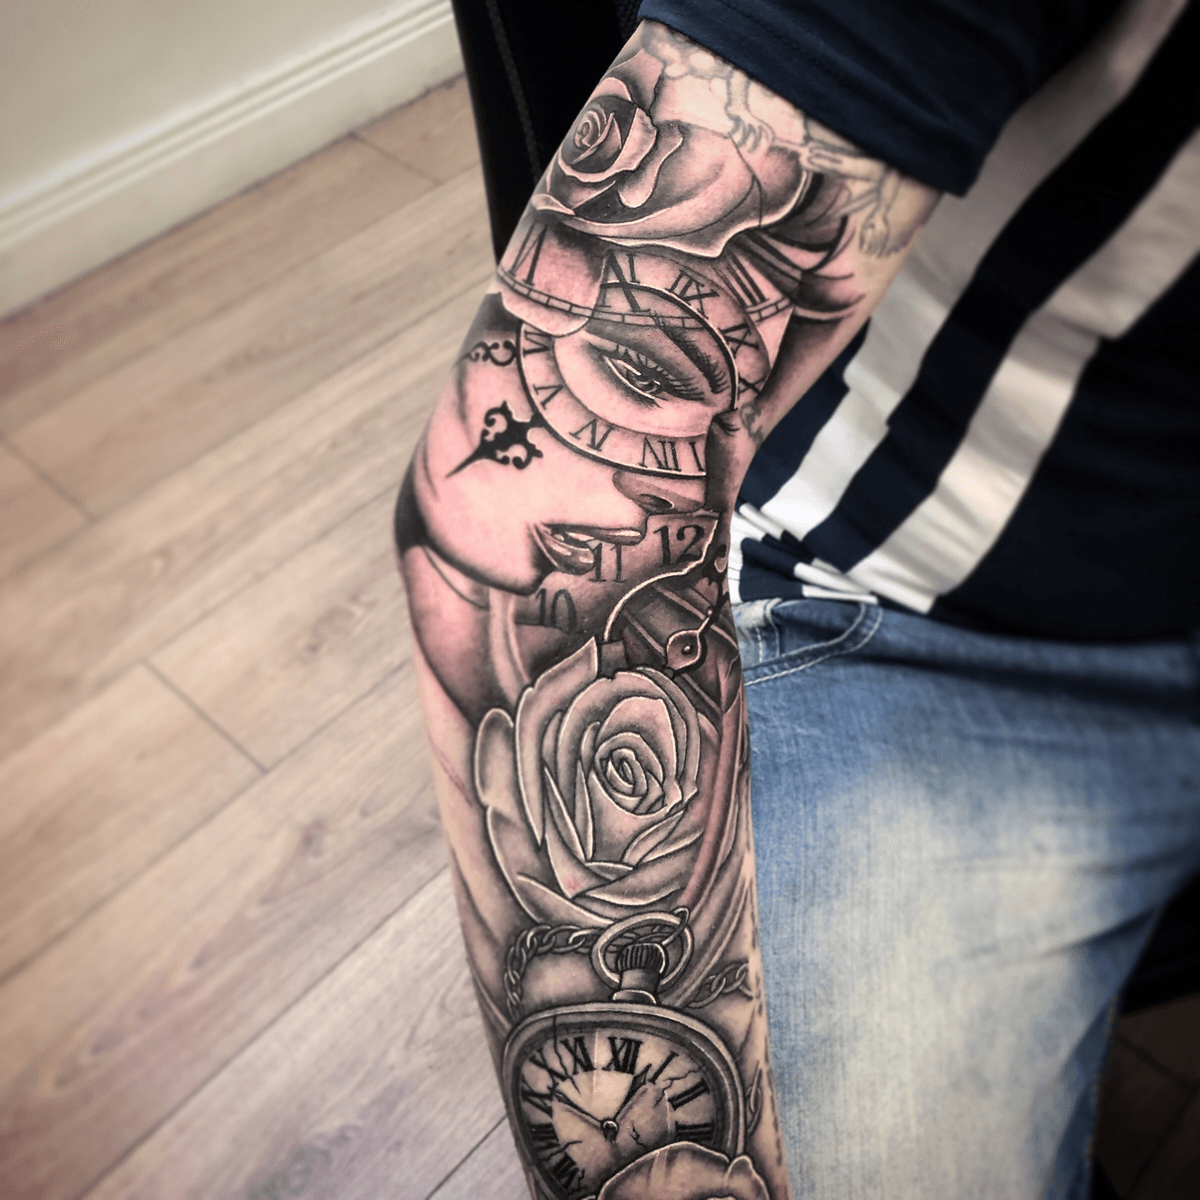 Tattoo uploaded by Douglas Mudie • Tattoodo